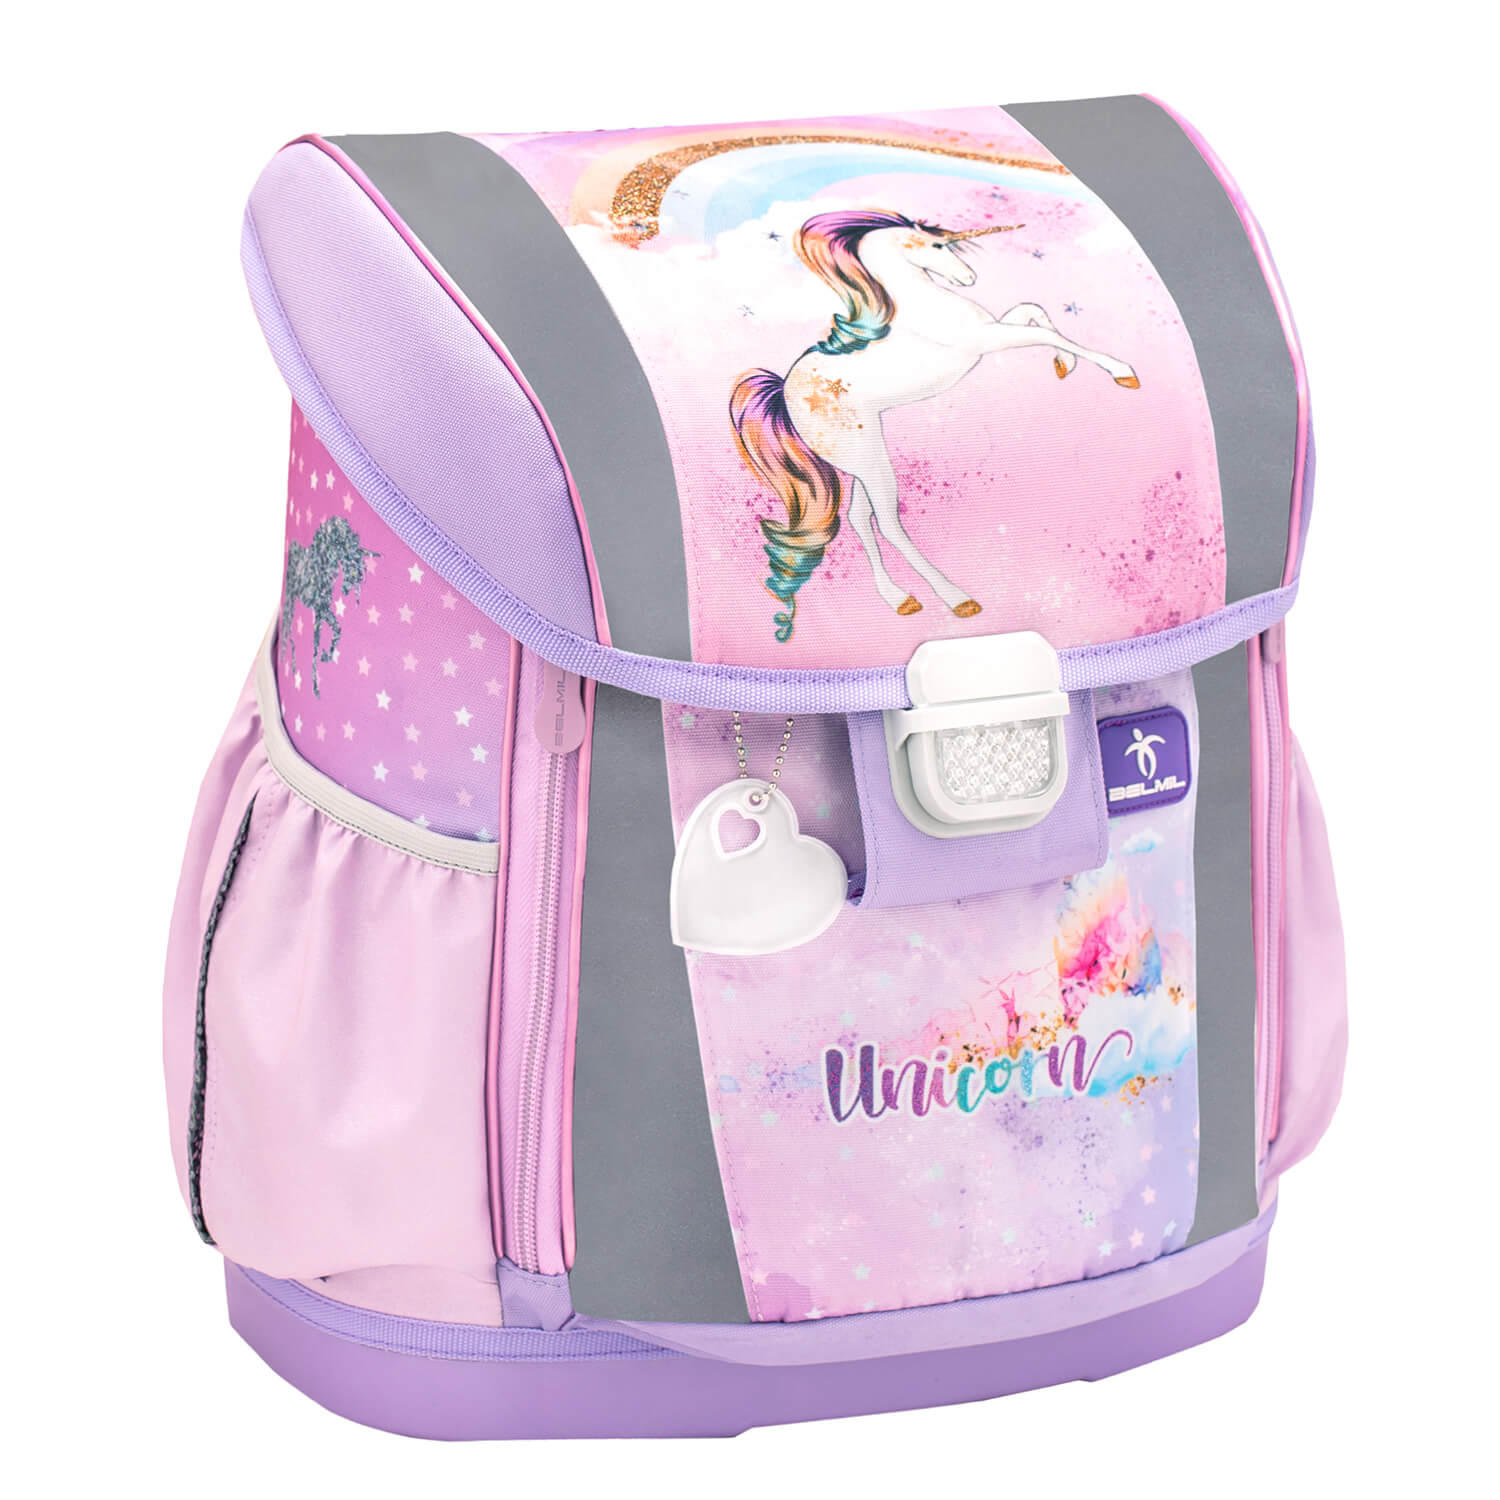 Customize Me Rainbow Unicorn schoolbag set 5 pcs